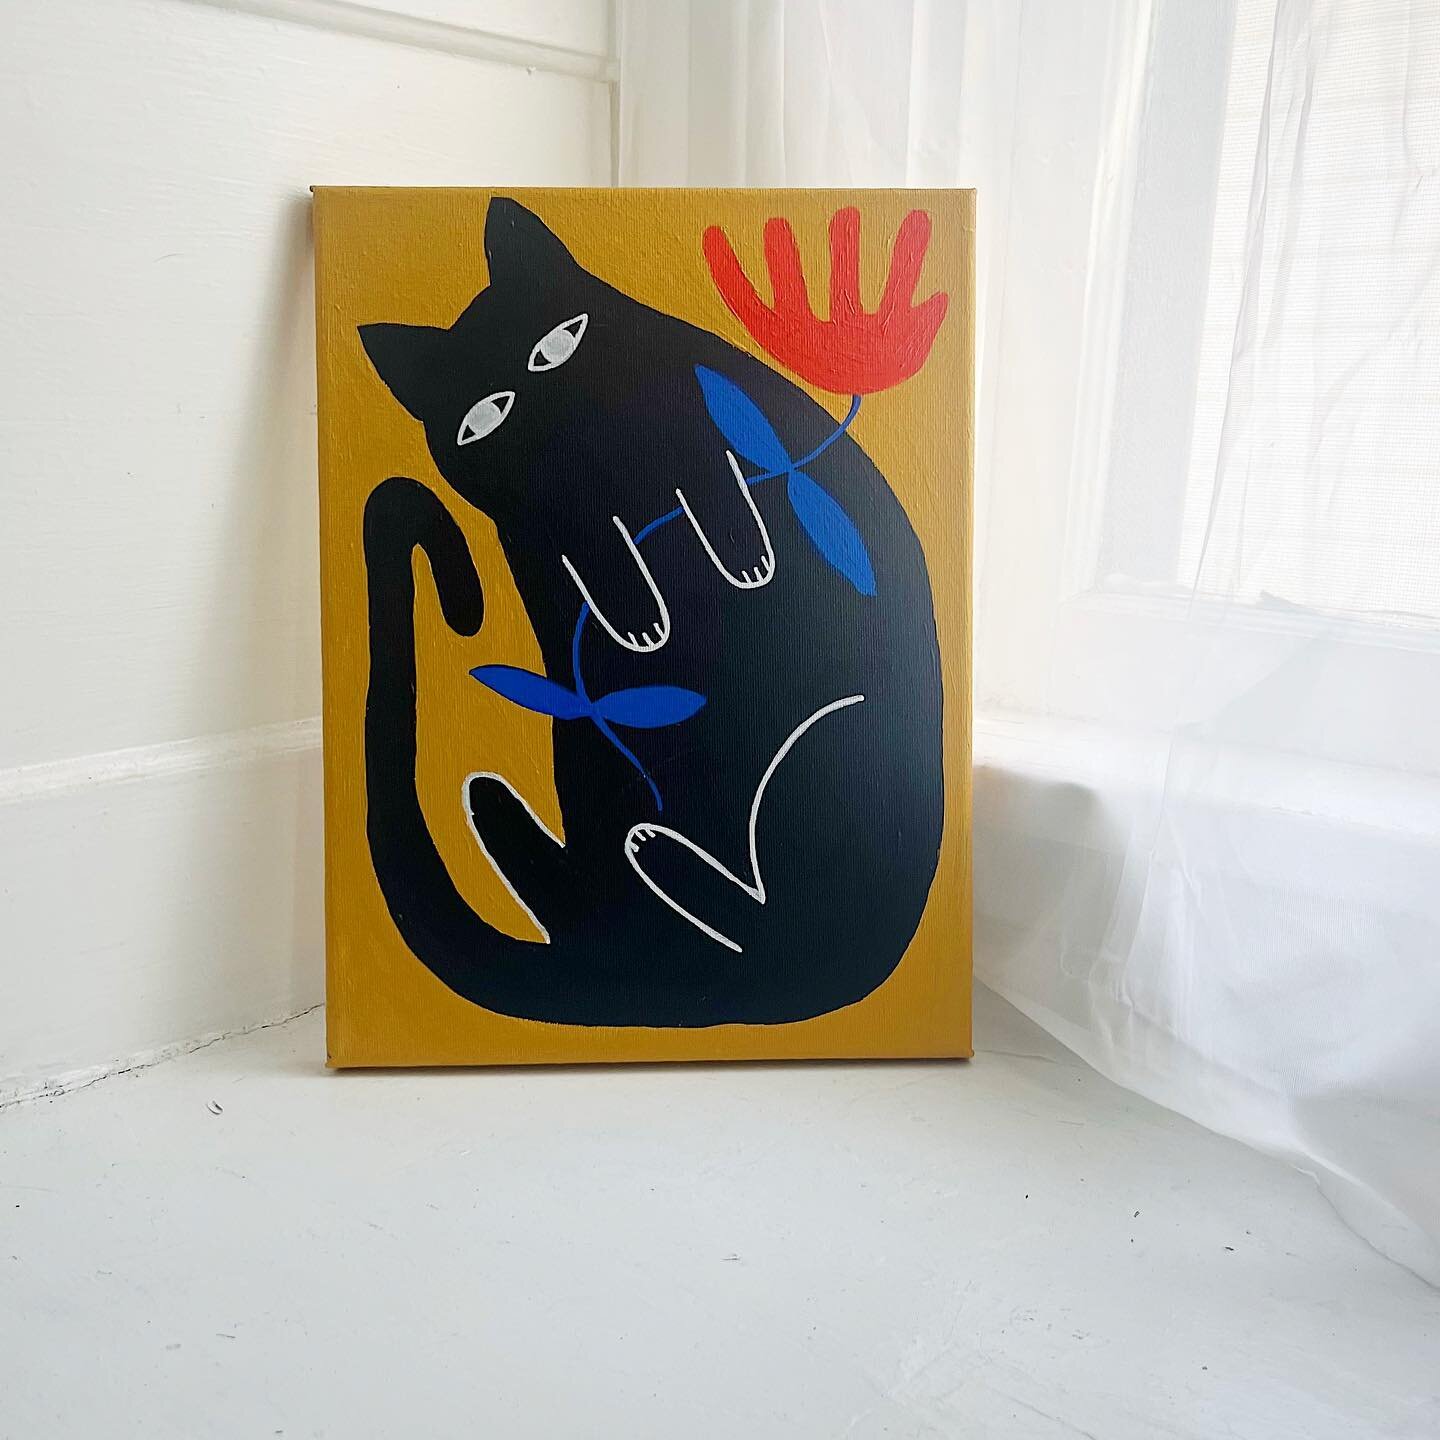 black cat ✨ 

#catart #blackcatsofinstagram #blackcat #painter #acrylic #florals #abstract #designer #pattern #color #mustard #cats #artprints #canvas #painting #graphicdesign